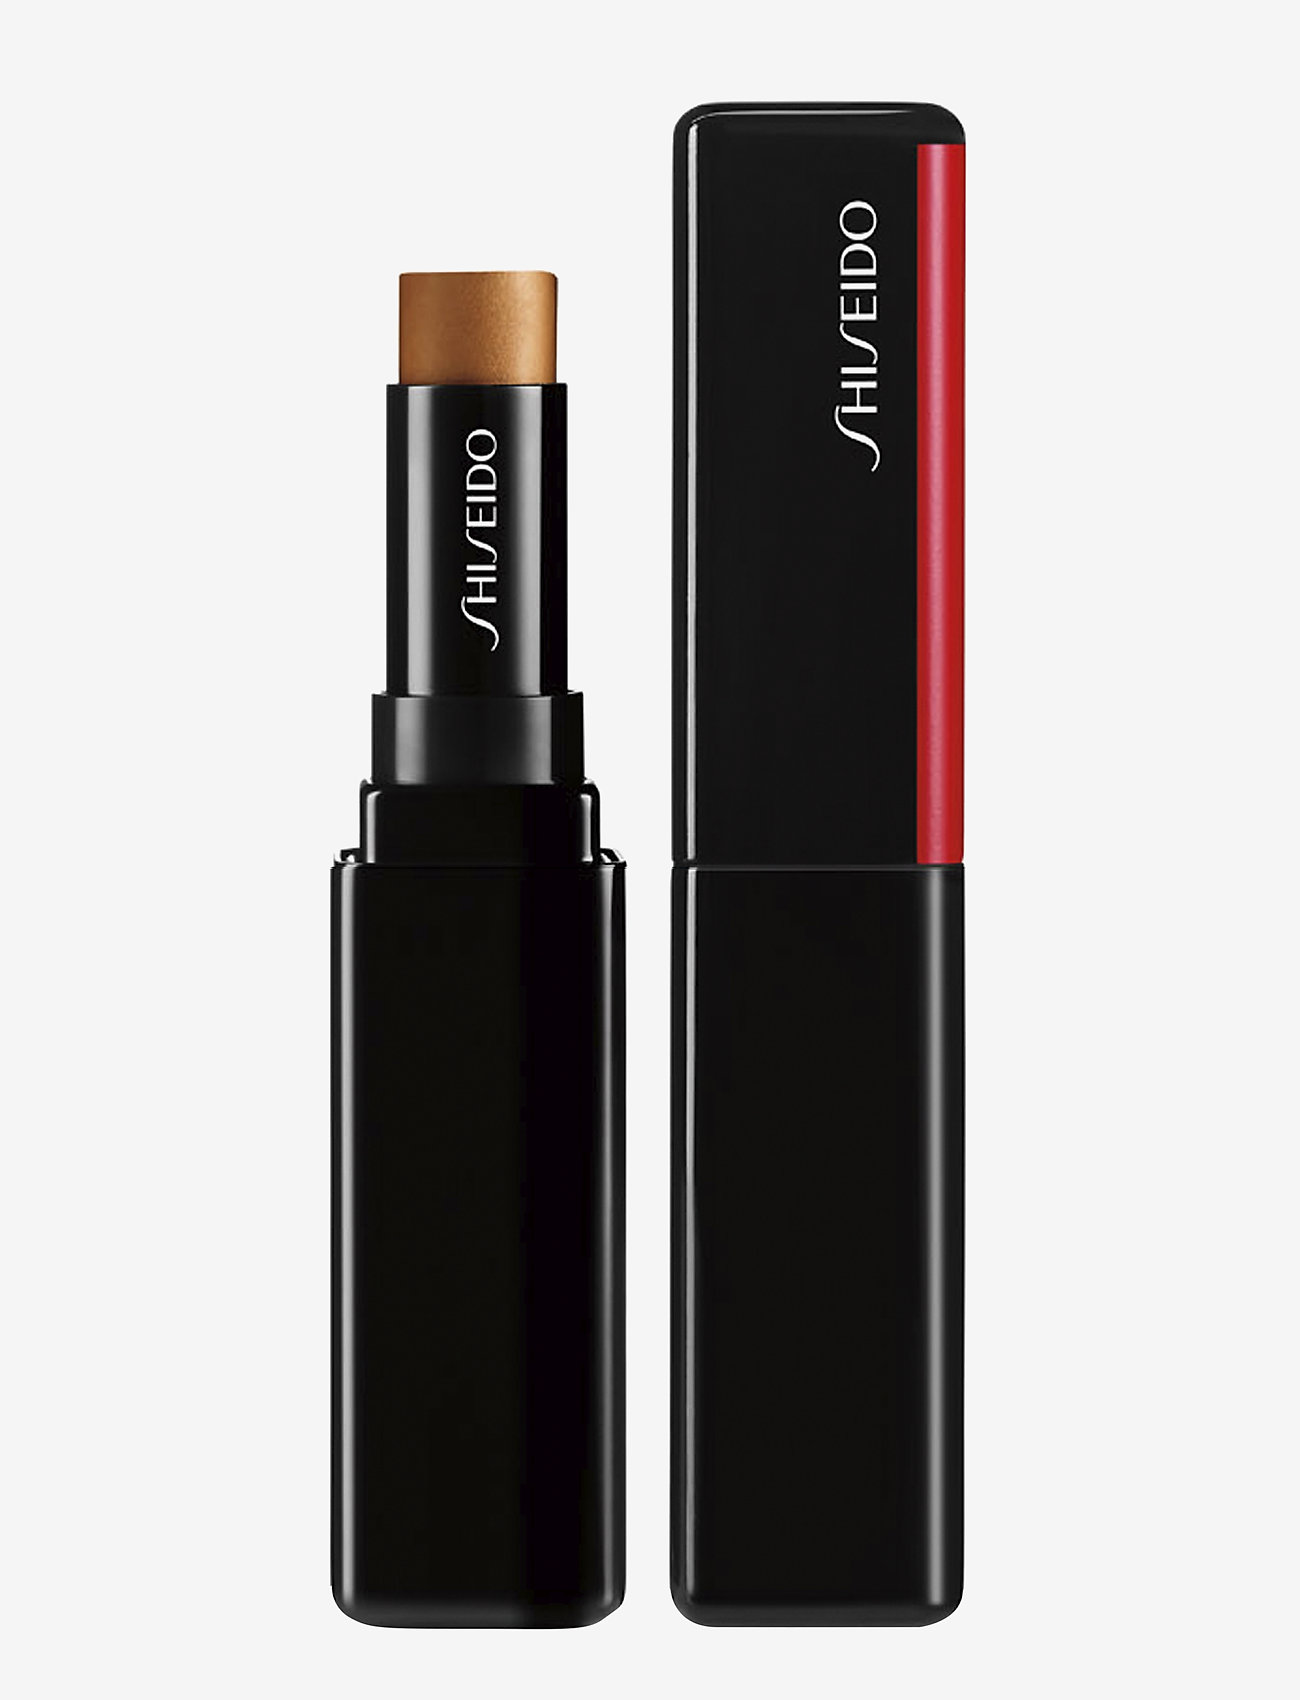 Shiseido - Shiseido Synchro Skin Gelstick Concealer - concealers - 304 medium - 0